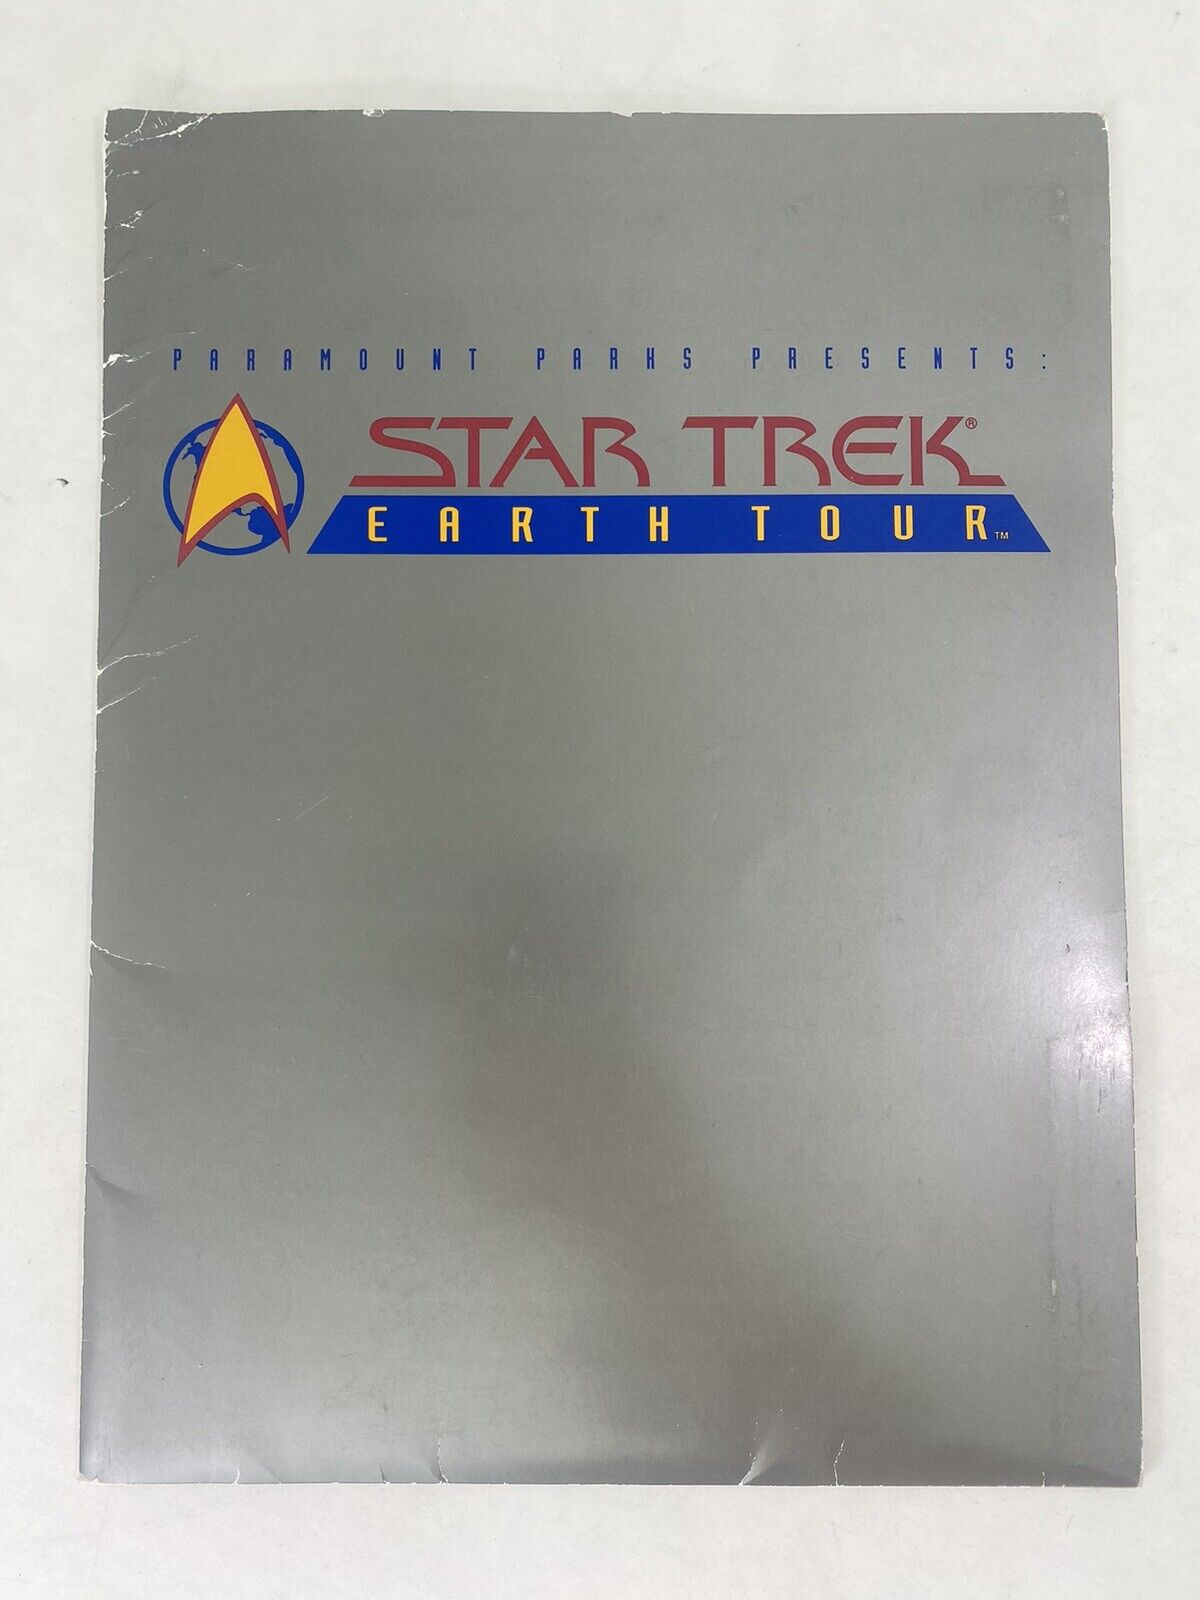 1993 Star Trek Eath Tour Program Folder With Photos MINT VINTAGE ORIGINAL